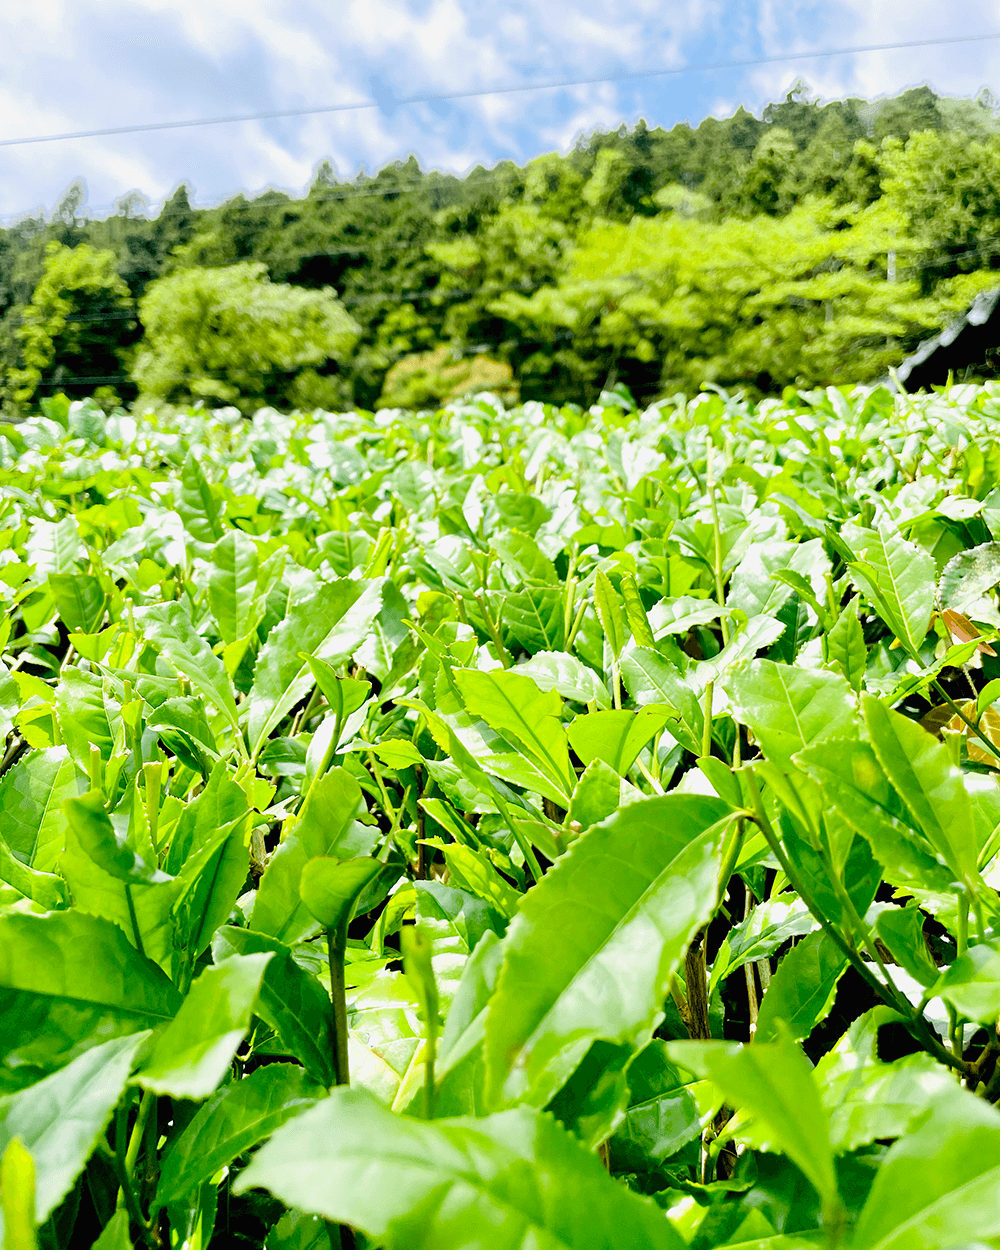 Field of green tea leaves